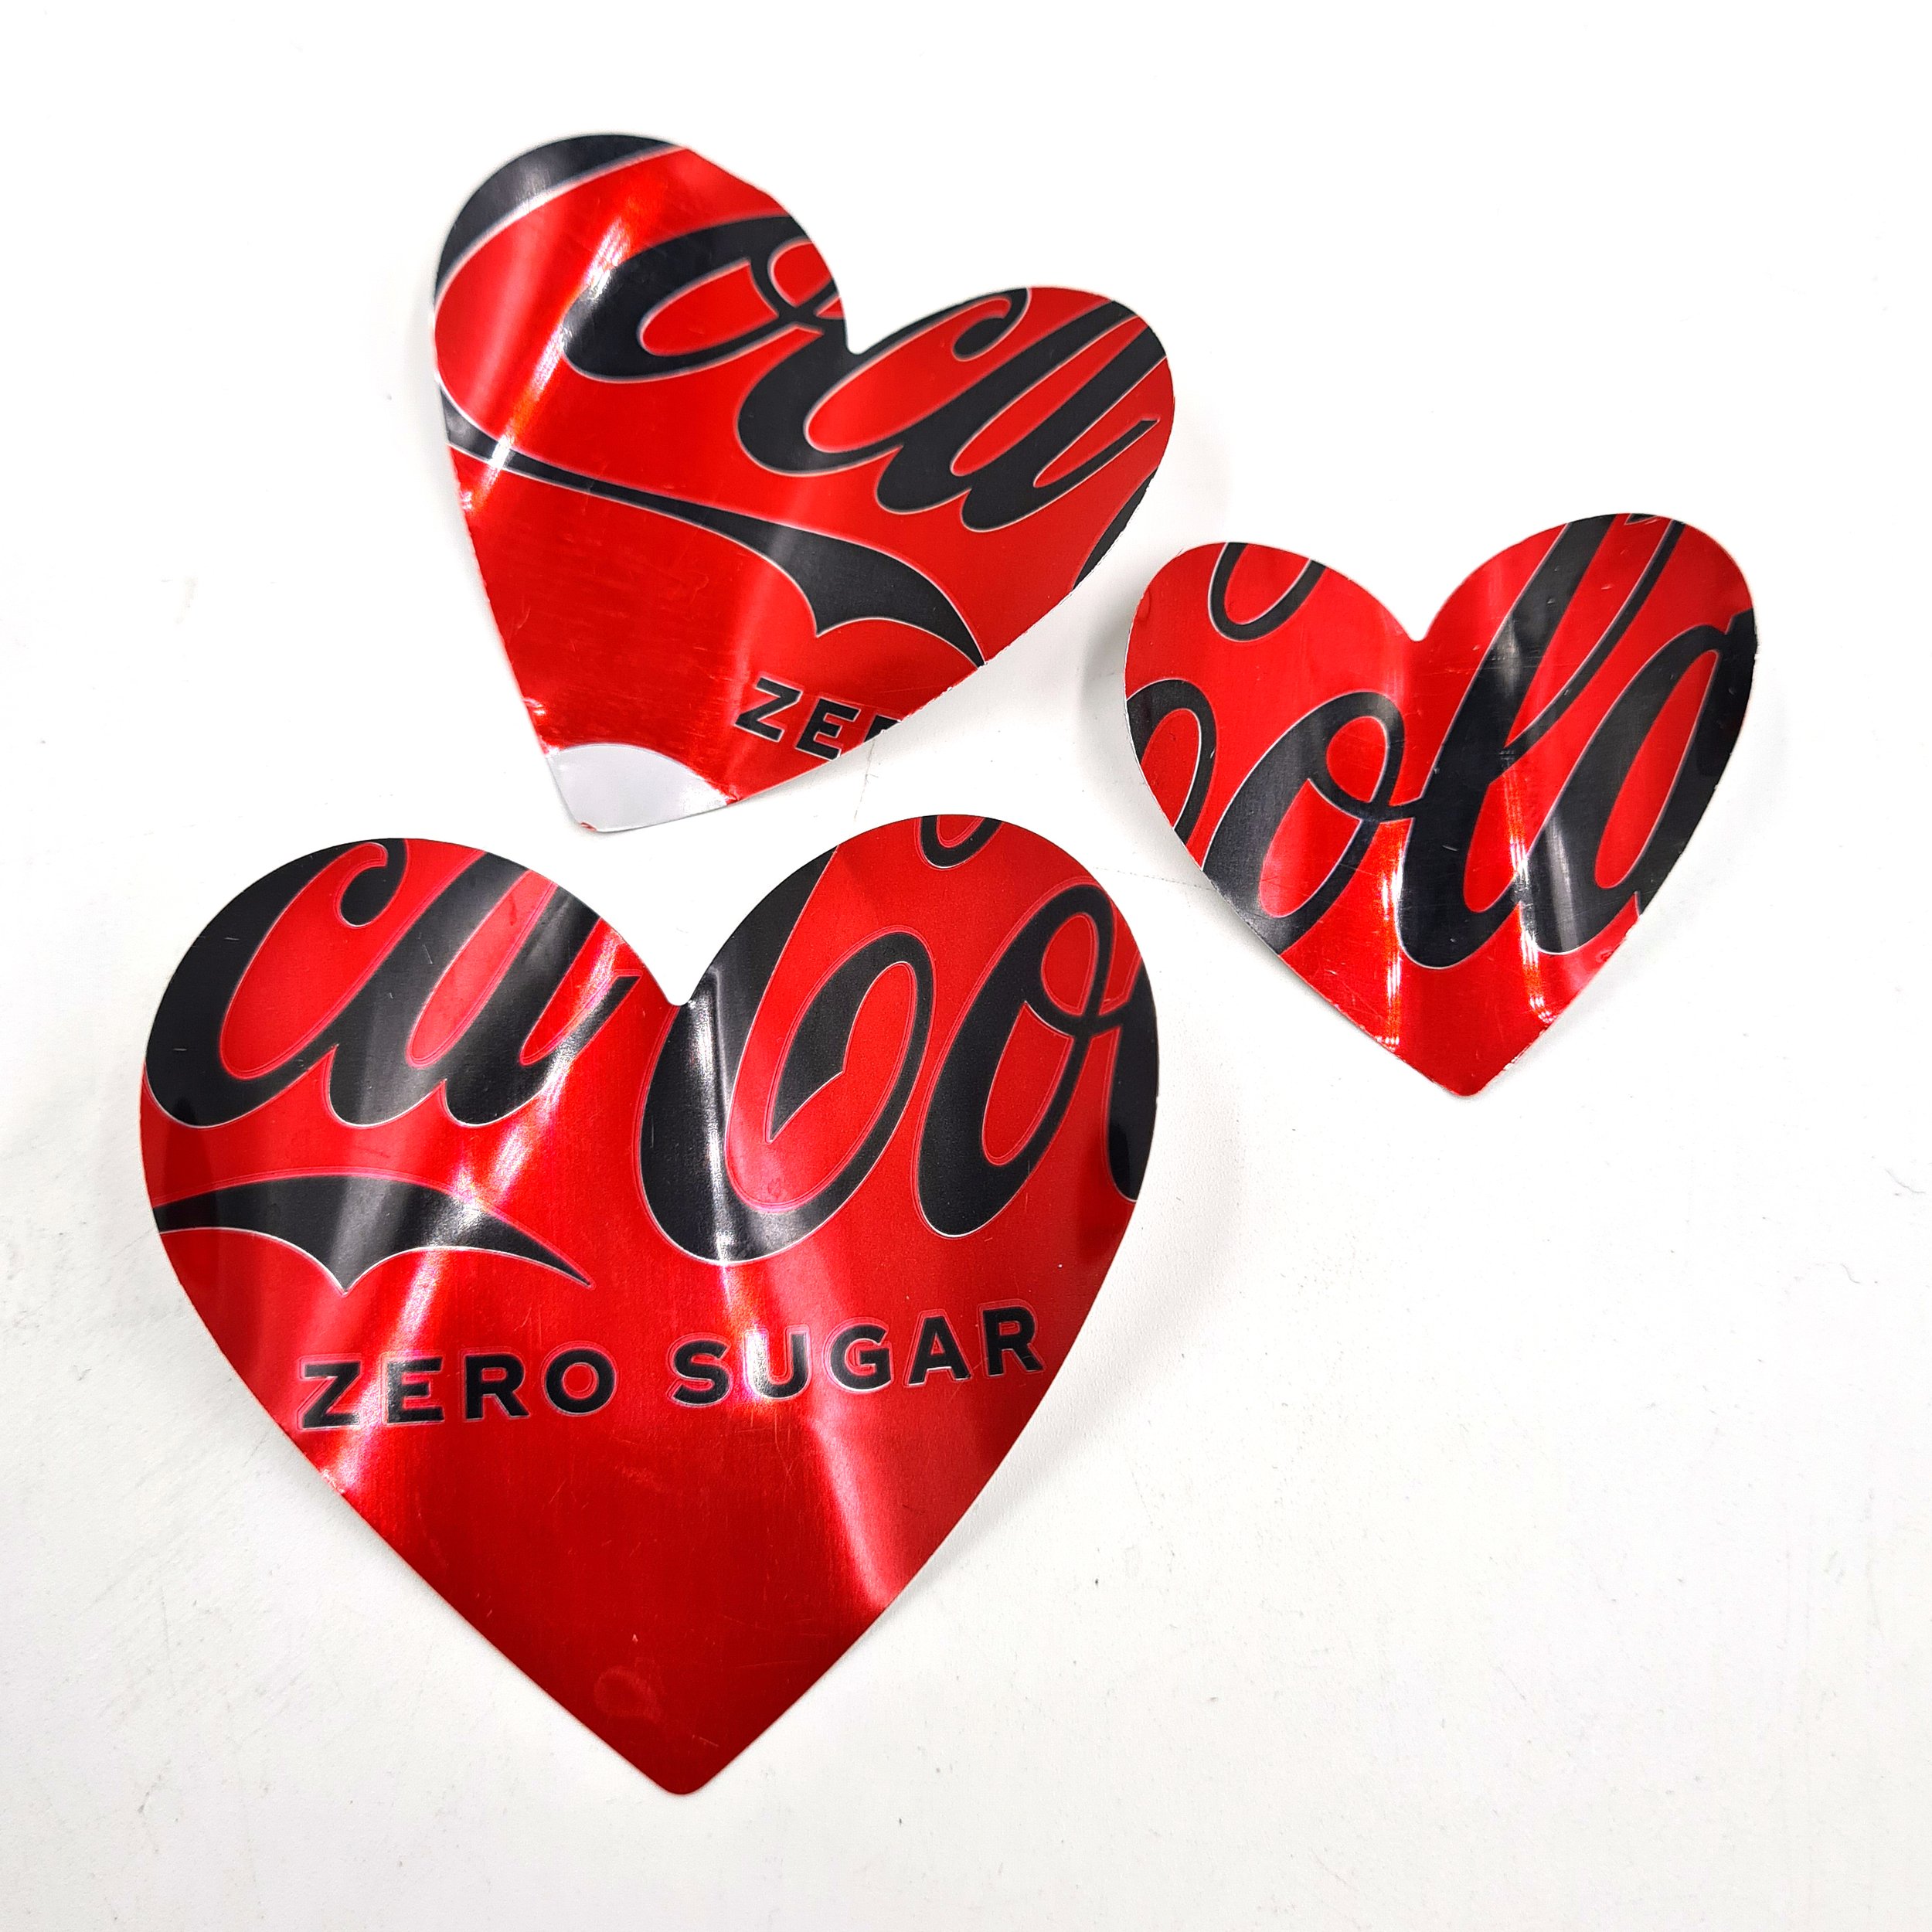 Coke Zero reycled can magnets Hearts 1.jpg